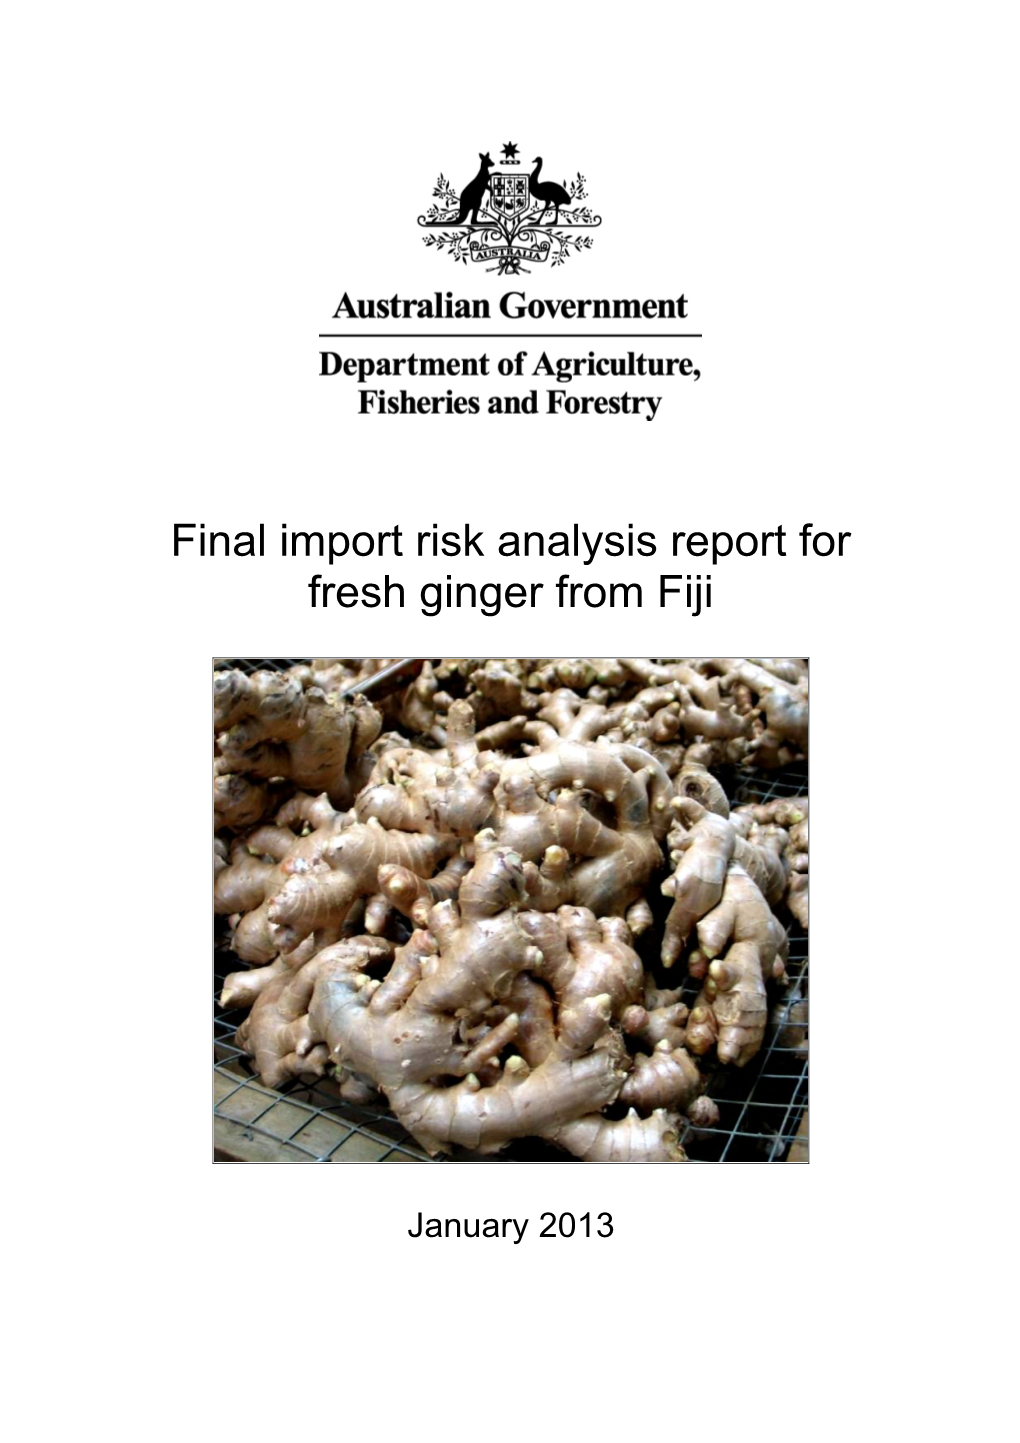 Final Import Risk Analysis Report for Fresh Ginger from Fiji